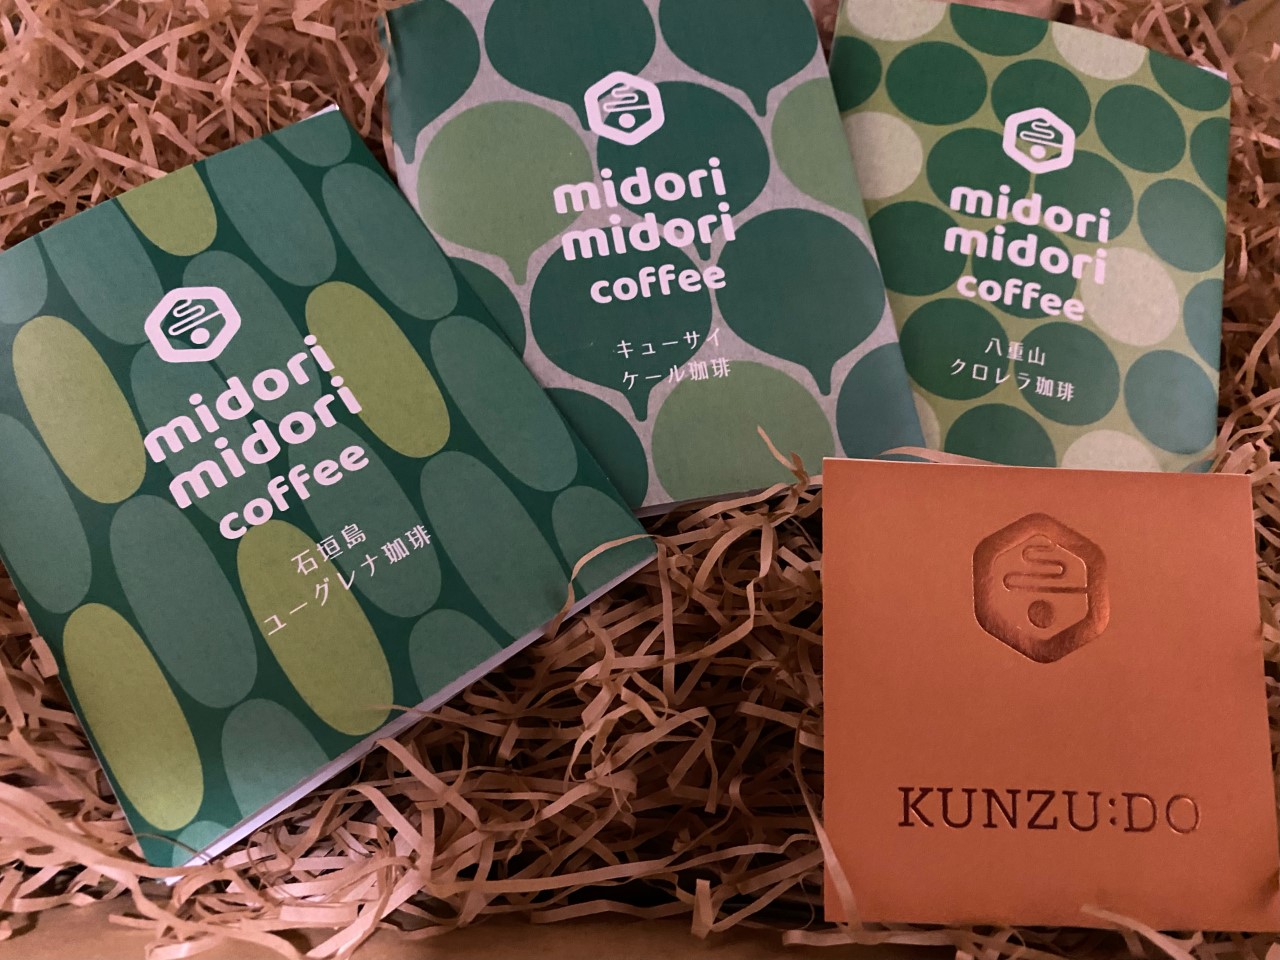 「midori midori coffee」シリーズイメージ